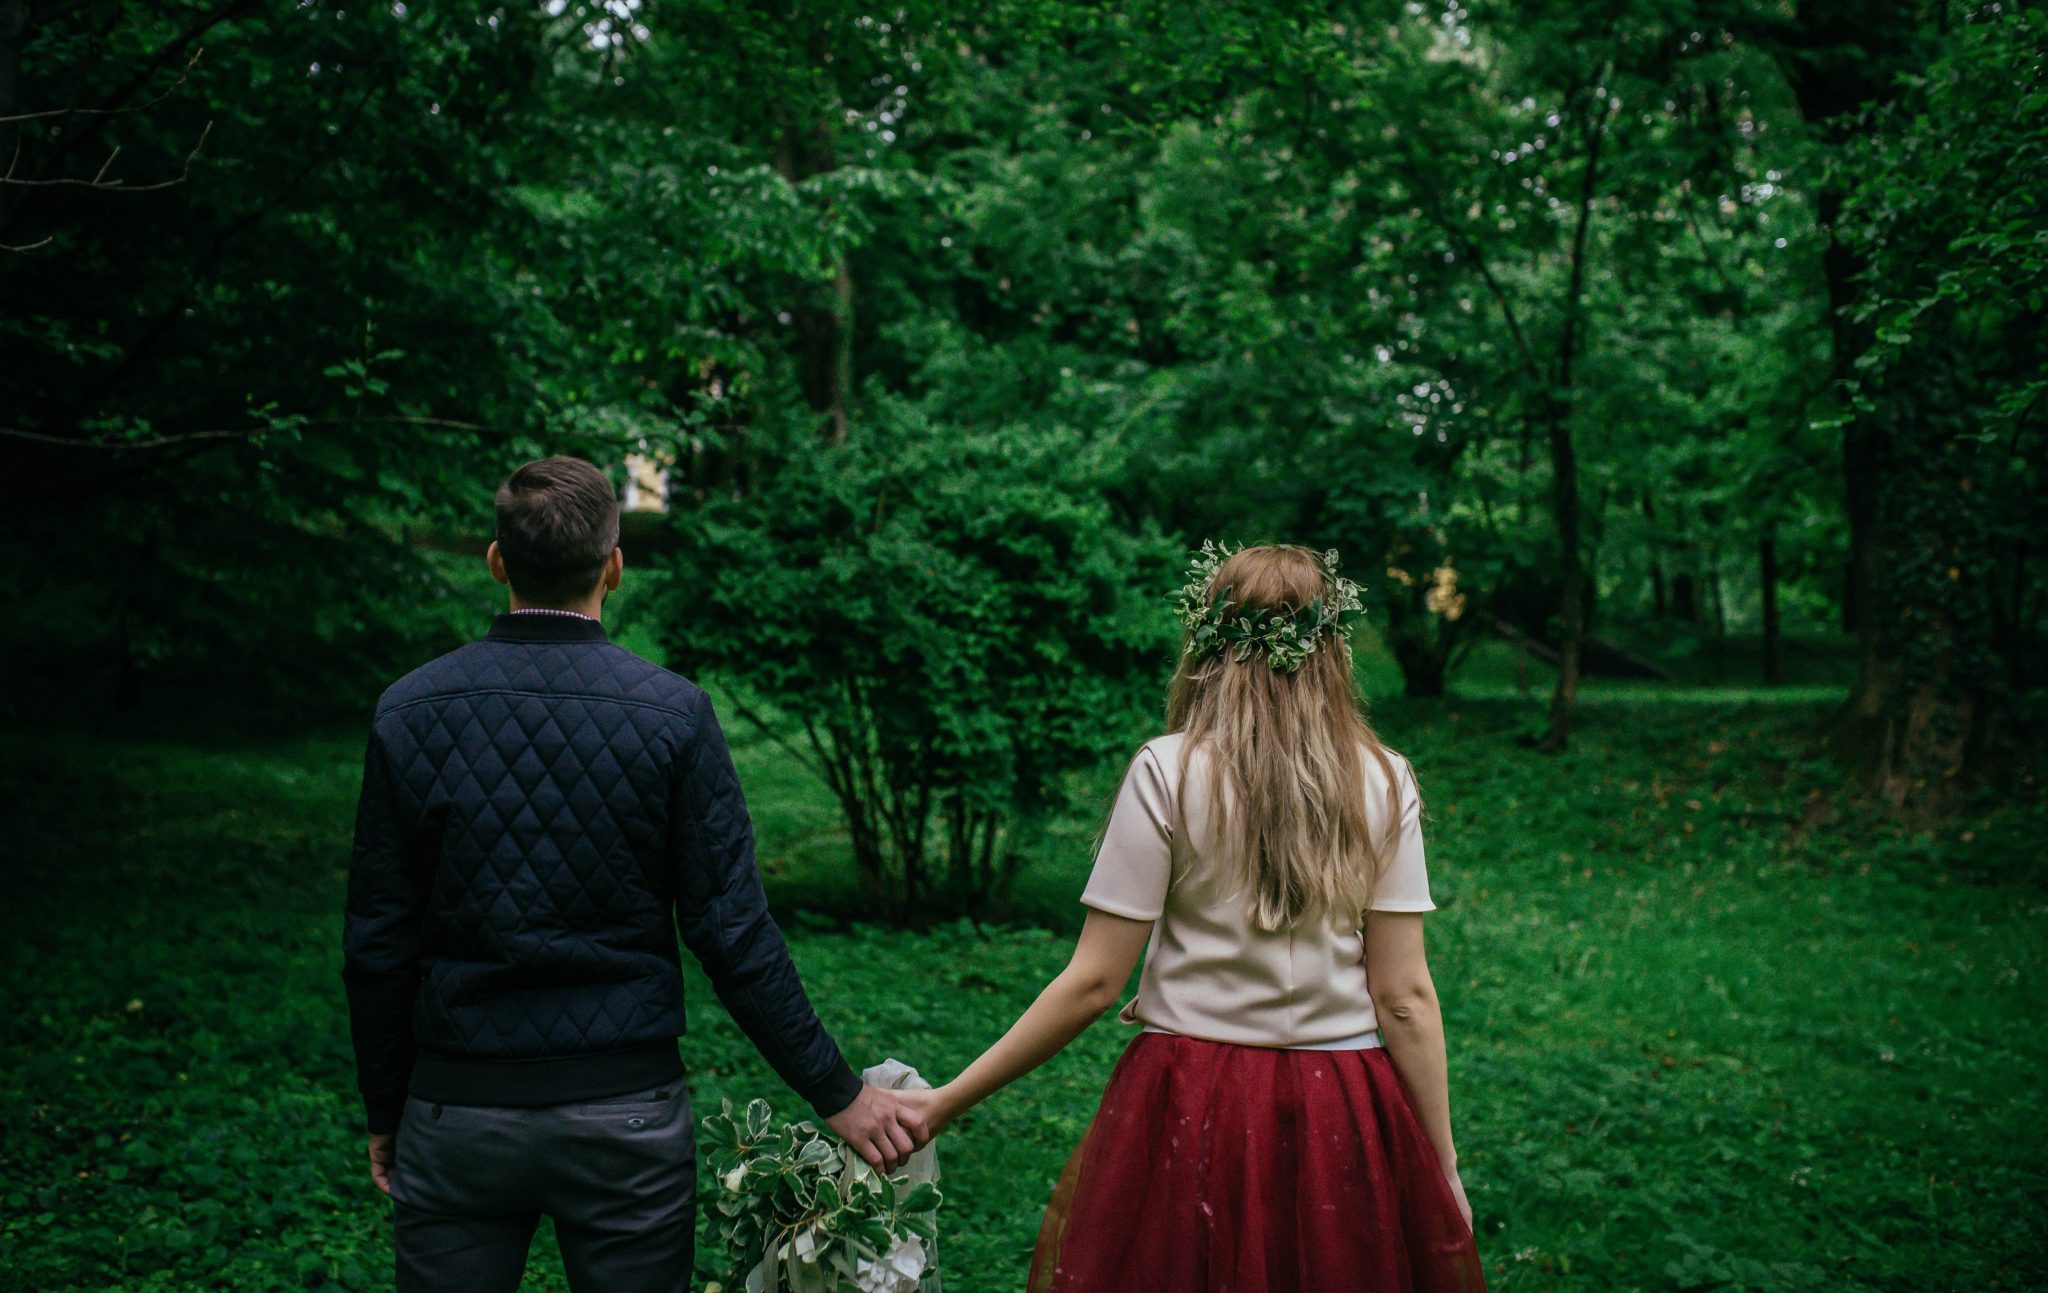 couple-walking-in-woods